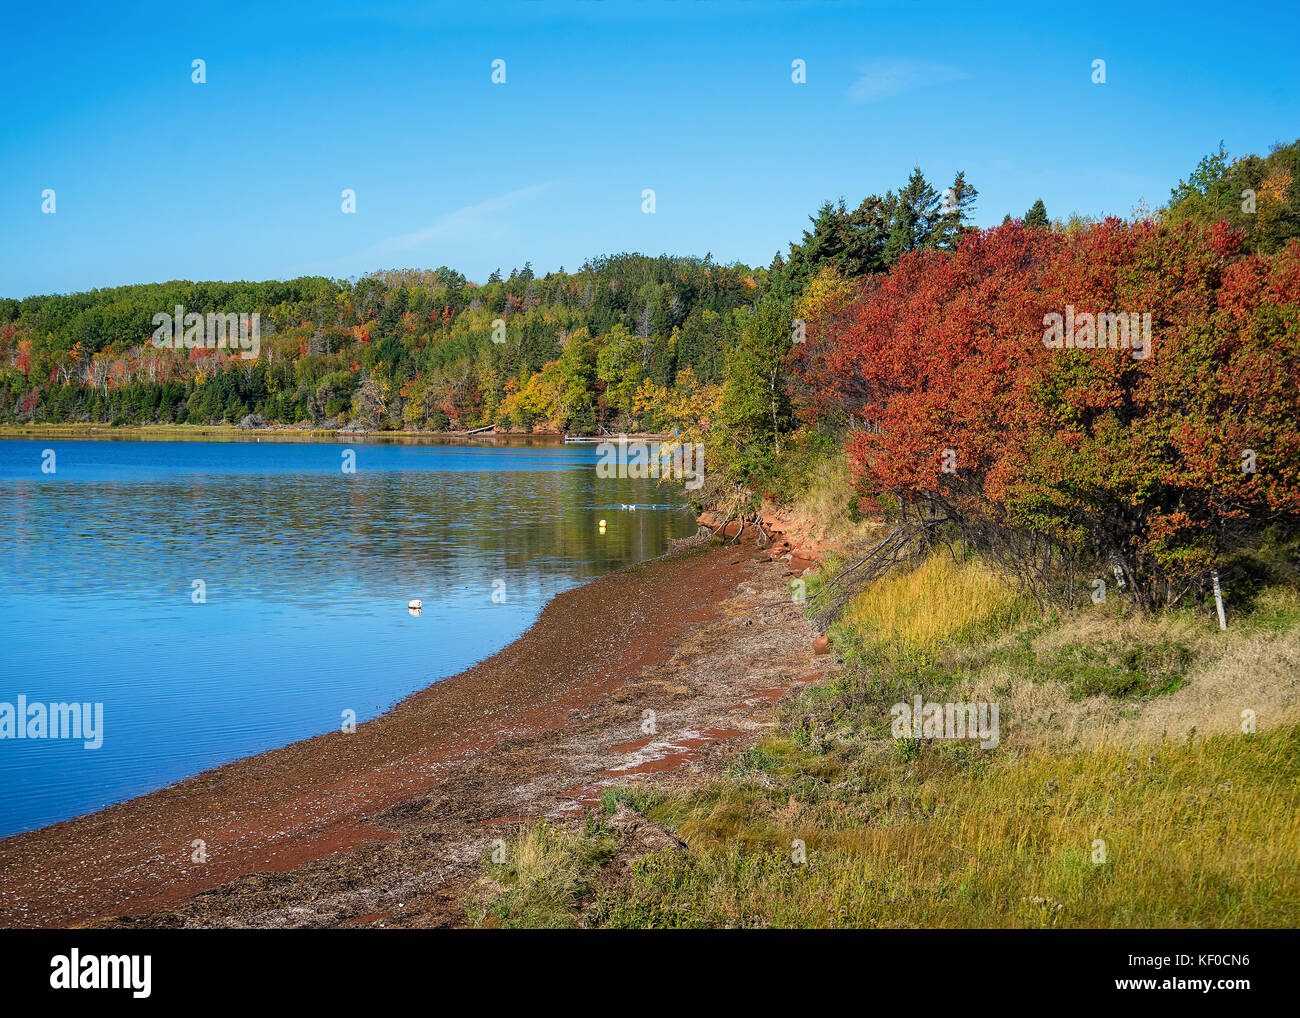 Fall foliage along a river in rural Prince Edward Island, Canada Stock